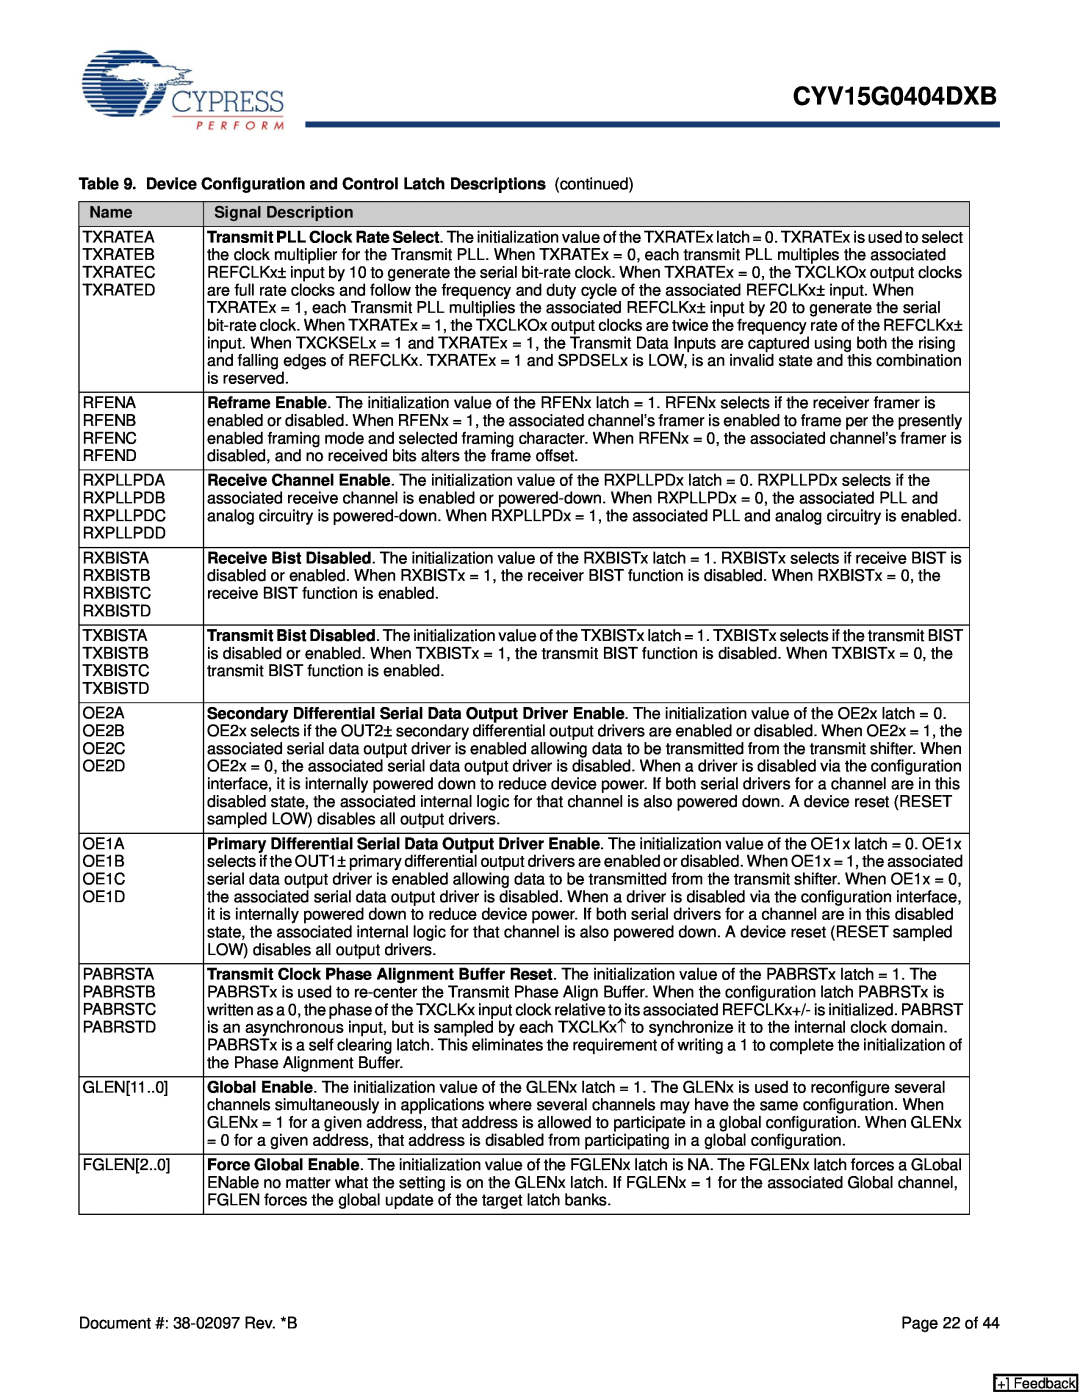 Cypress CYV15G0404DXB manual Page 22 of 